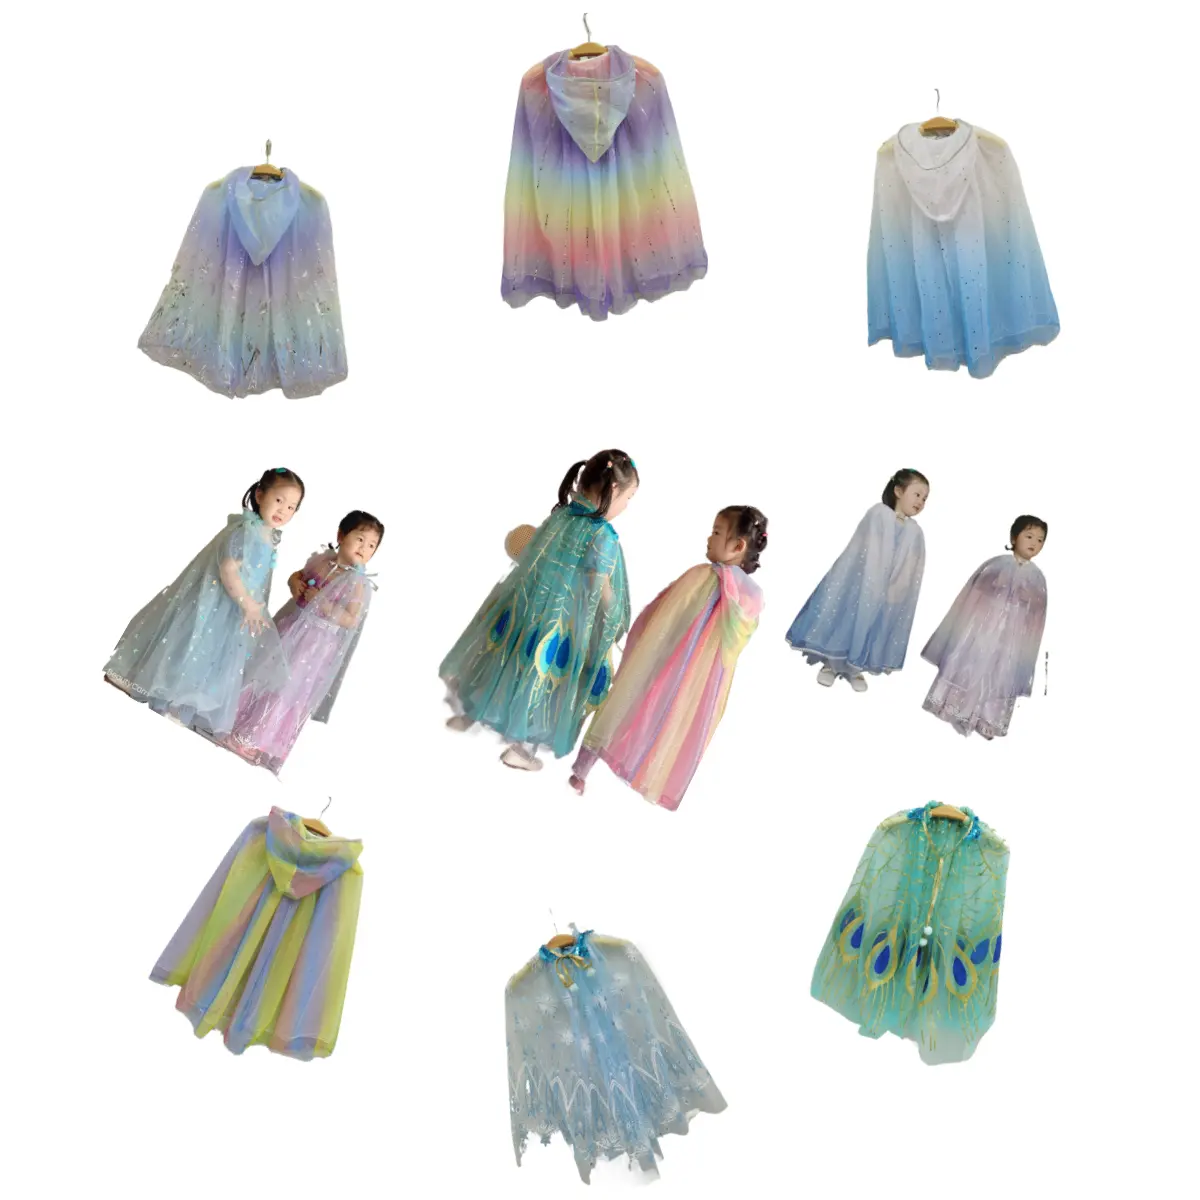 Yiwu Yiyuan-ropa suave para niños, disfraces de fiesta, capa de boutique para niñas, capa de princesa colorida de tul brillante